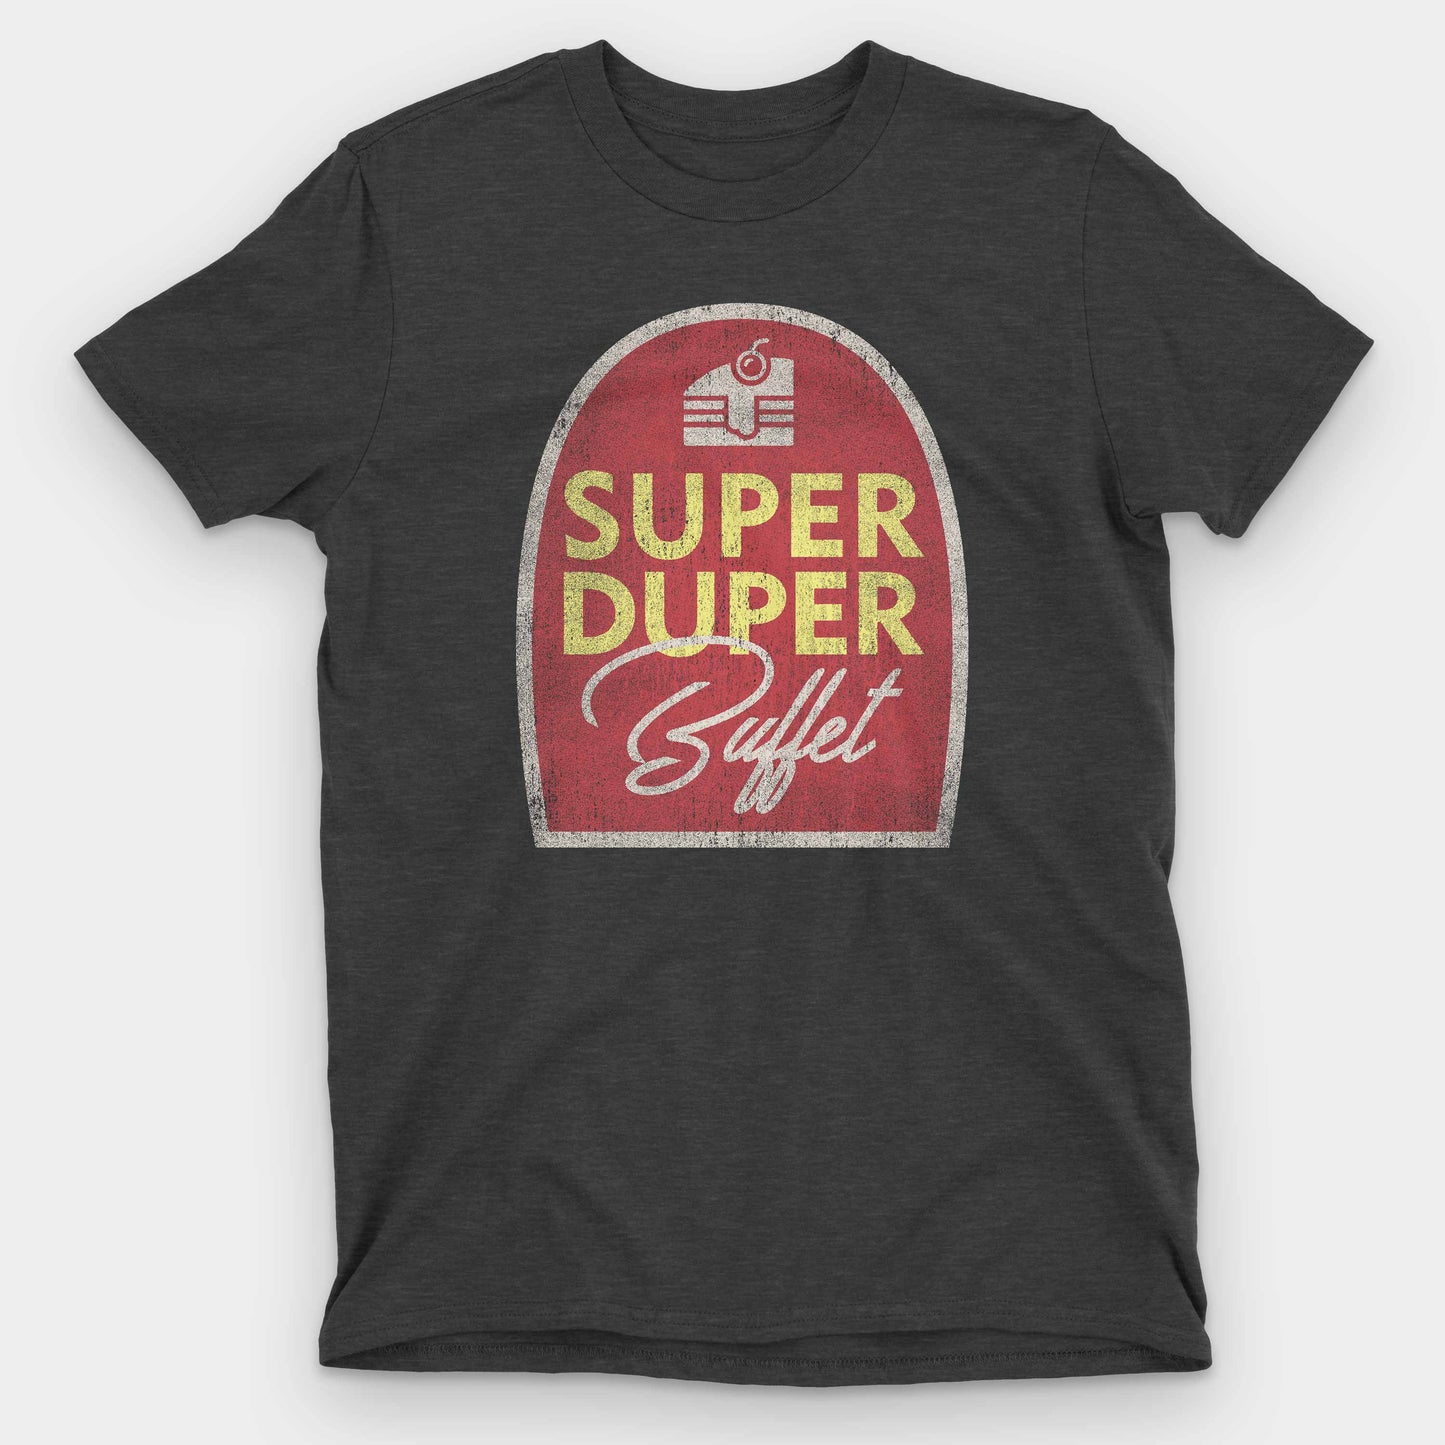 Heather Dark Grey Super Duper Buffet Graphic T-Shirt by Snaxtime